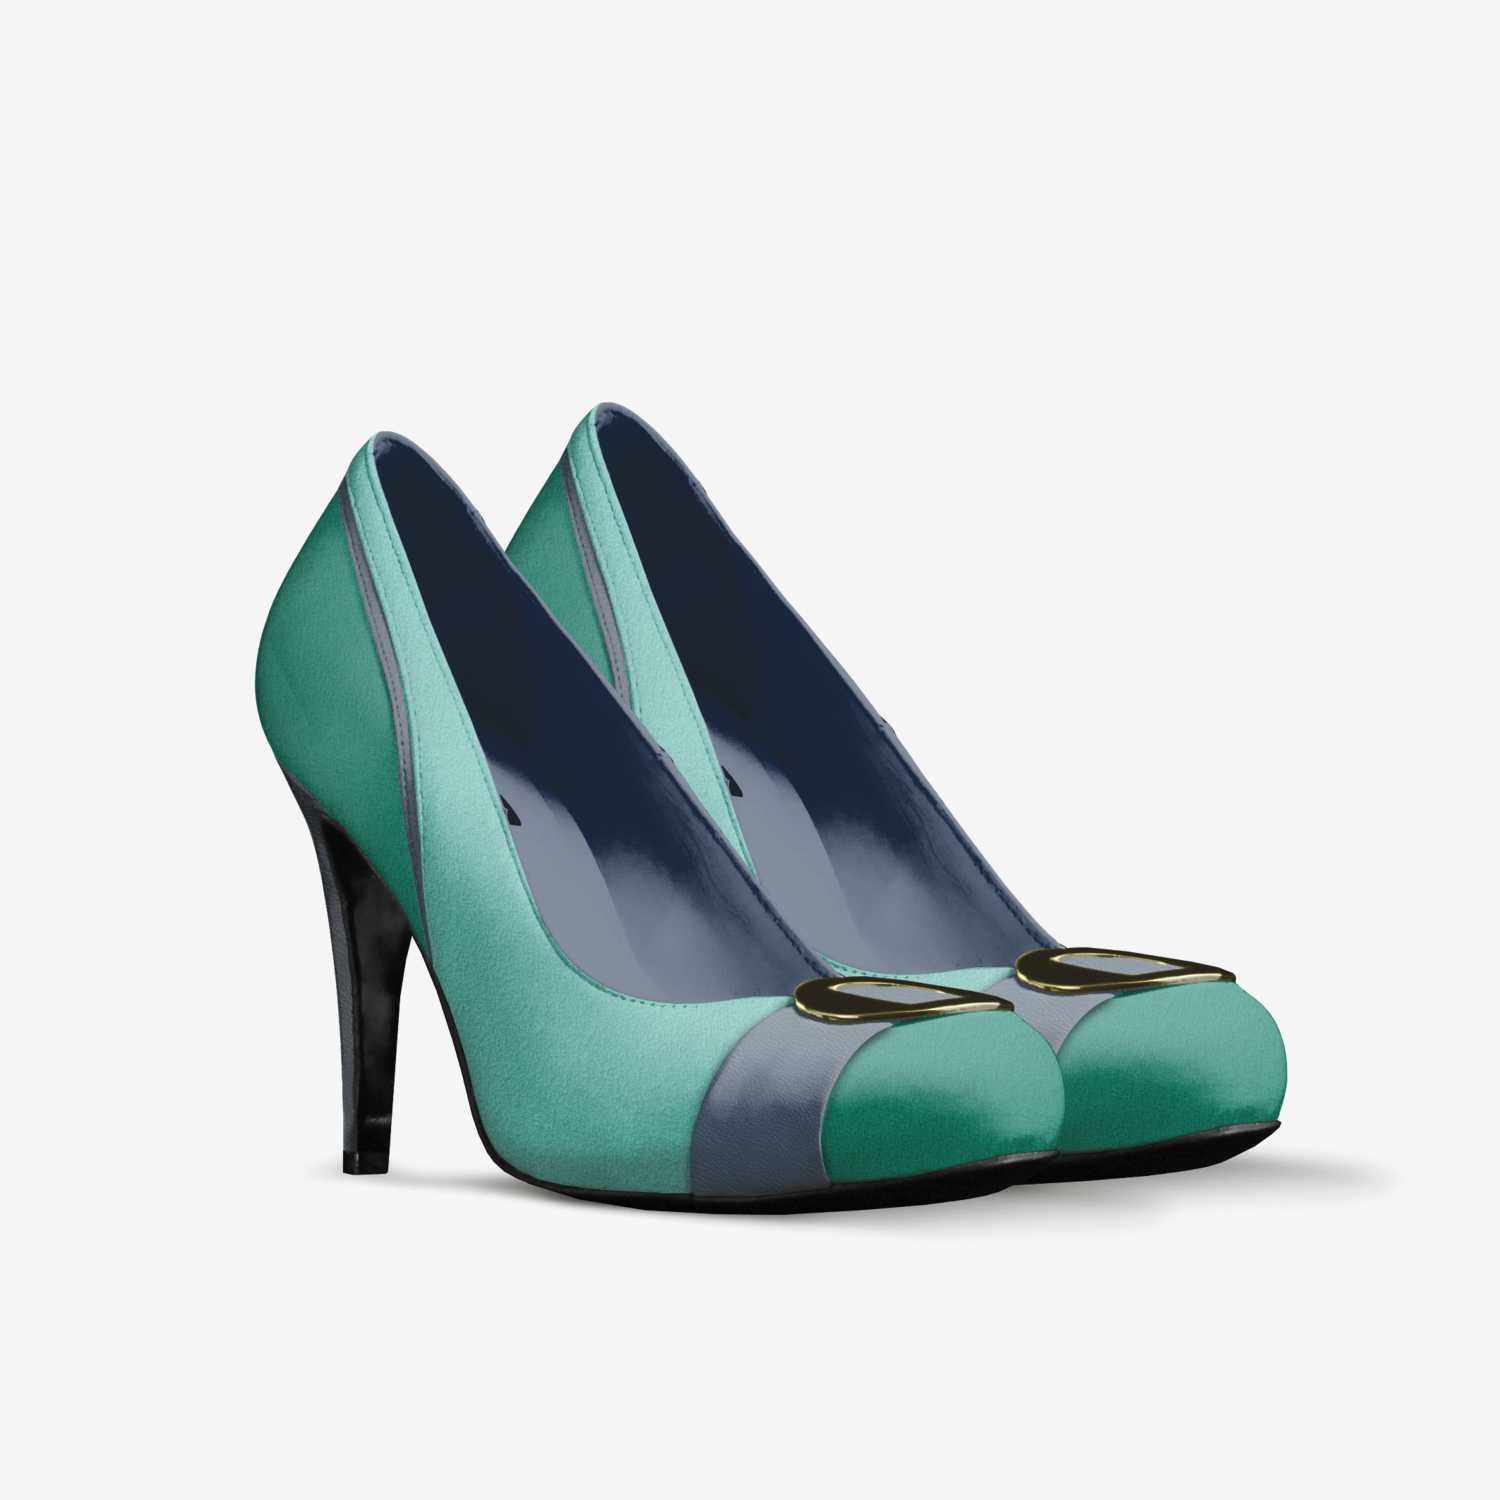 Dani | A Custom Shoe concept by Beatrice Redi